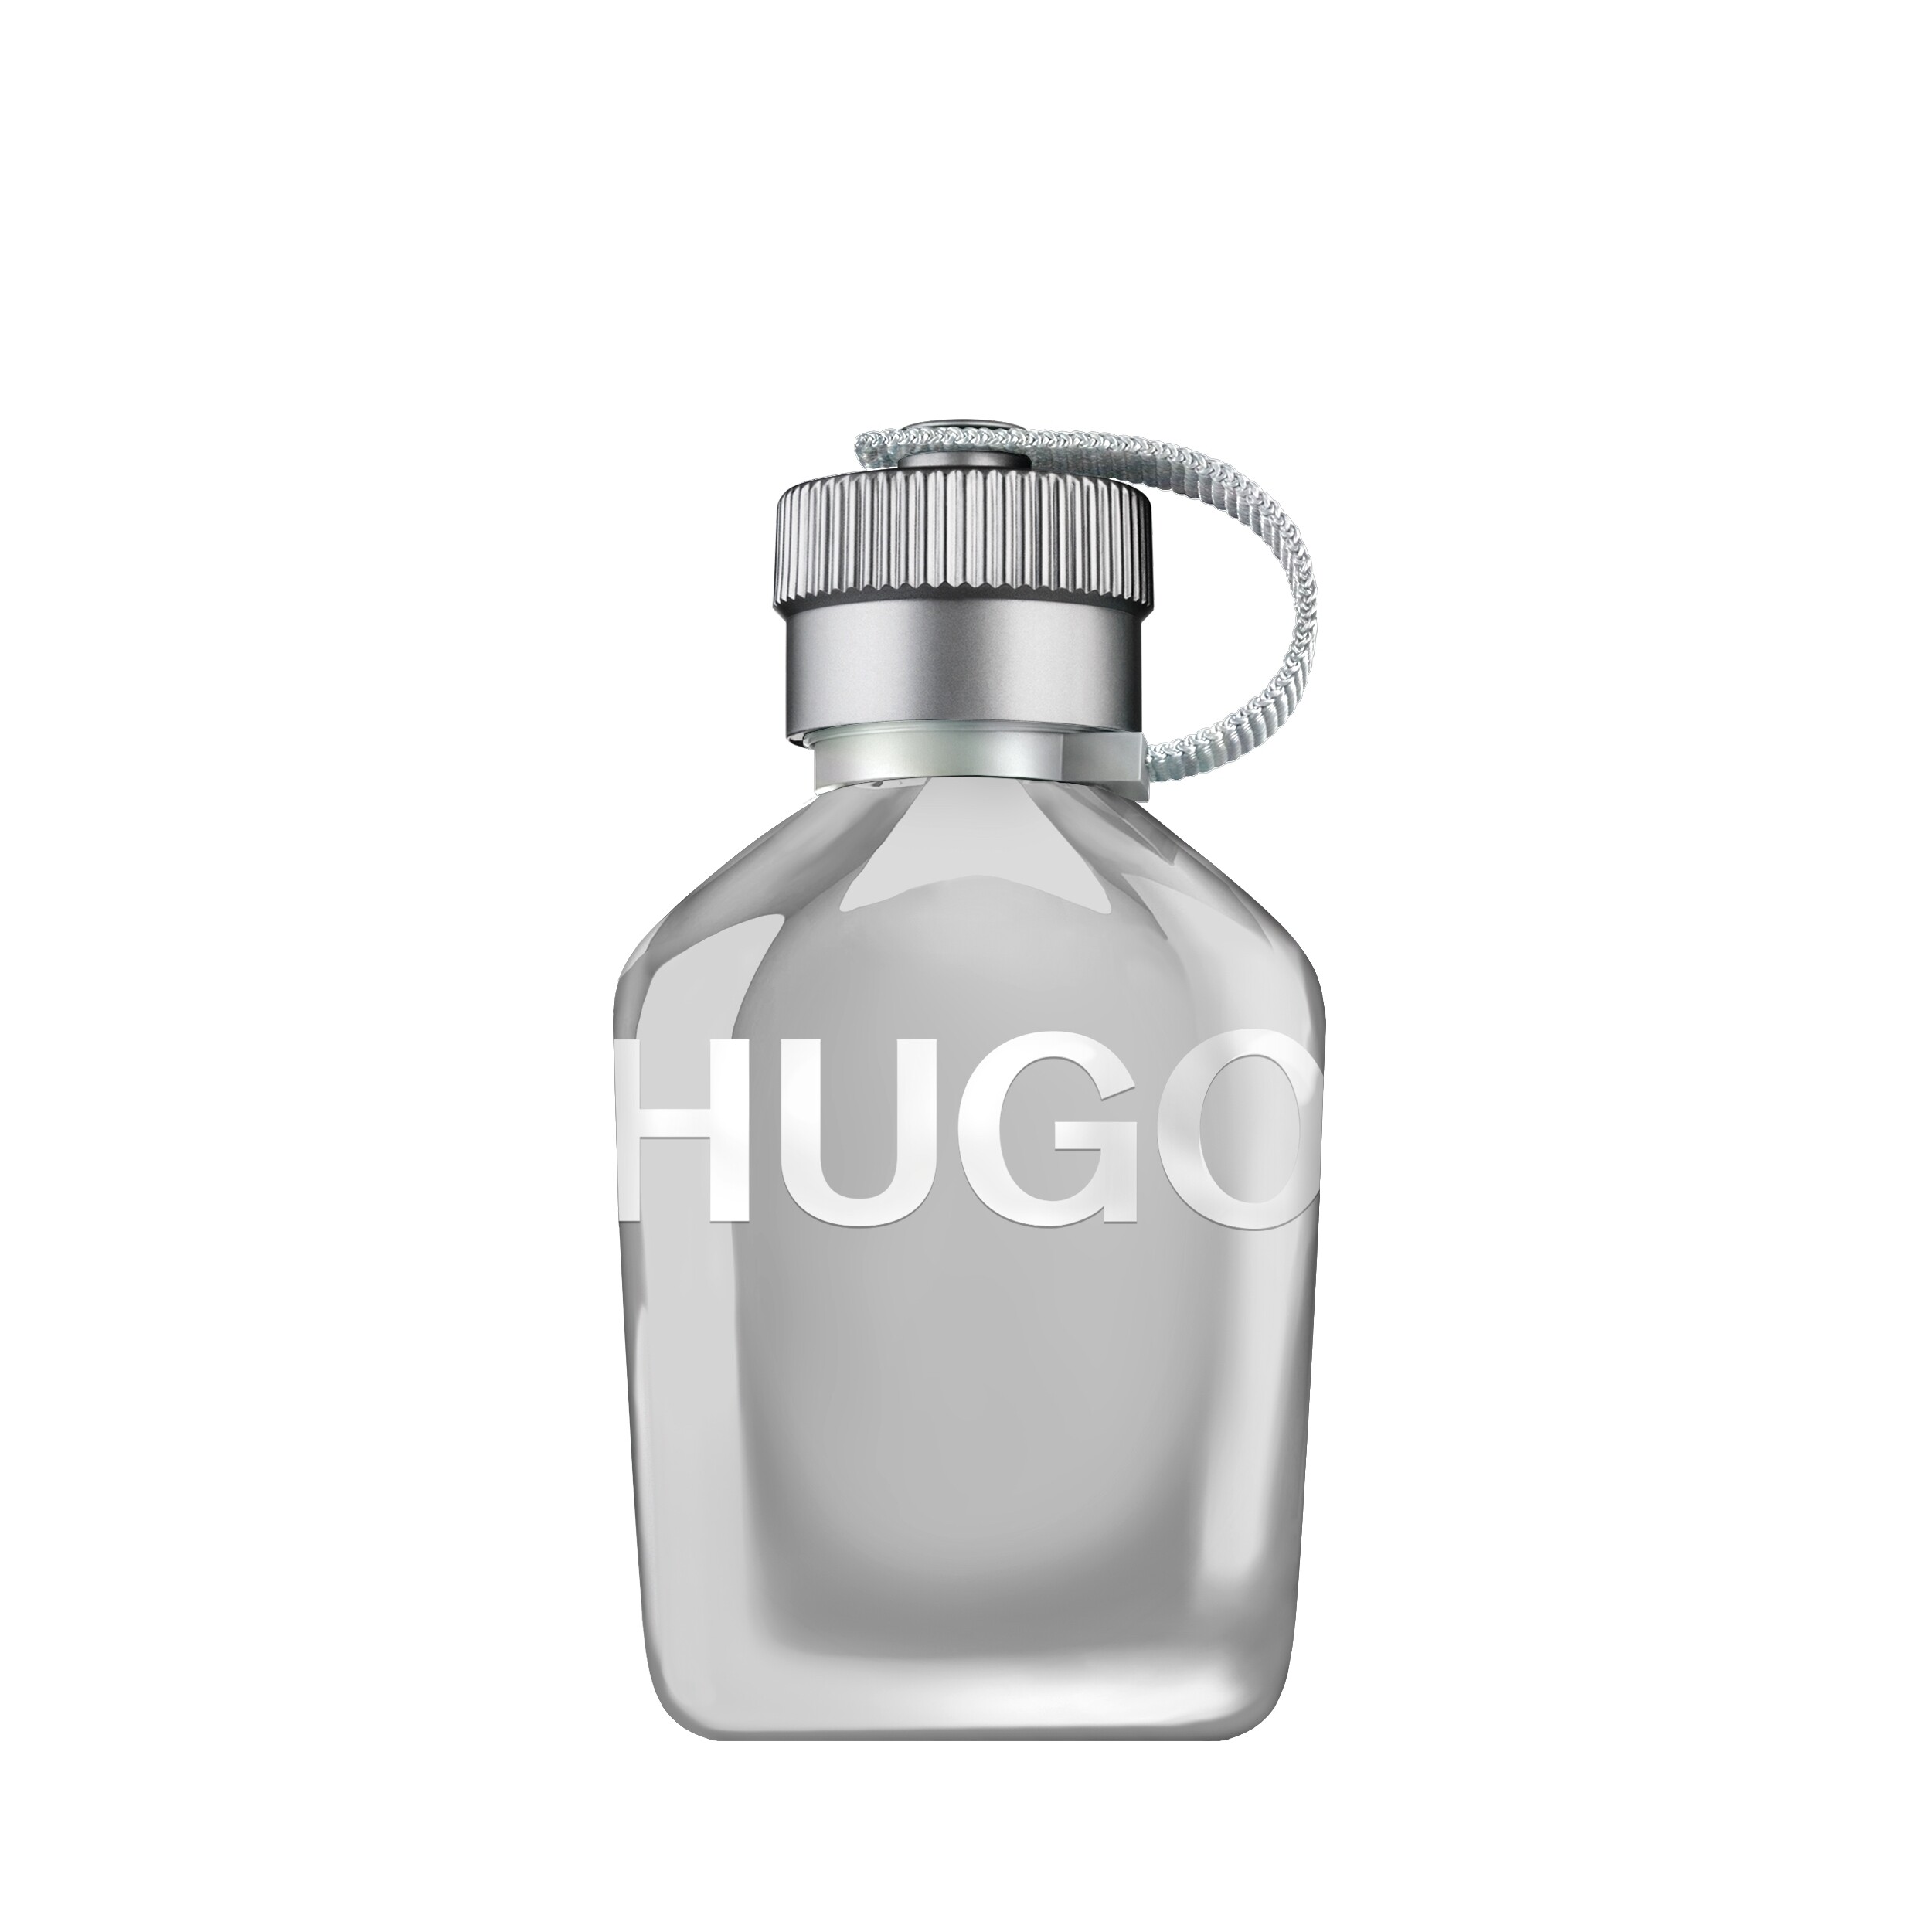 Hugo EDT Reflective Limited Edition 75ml